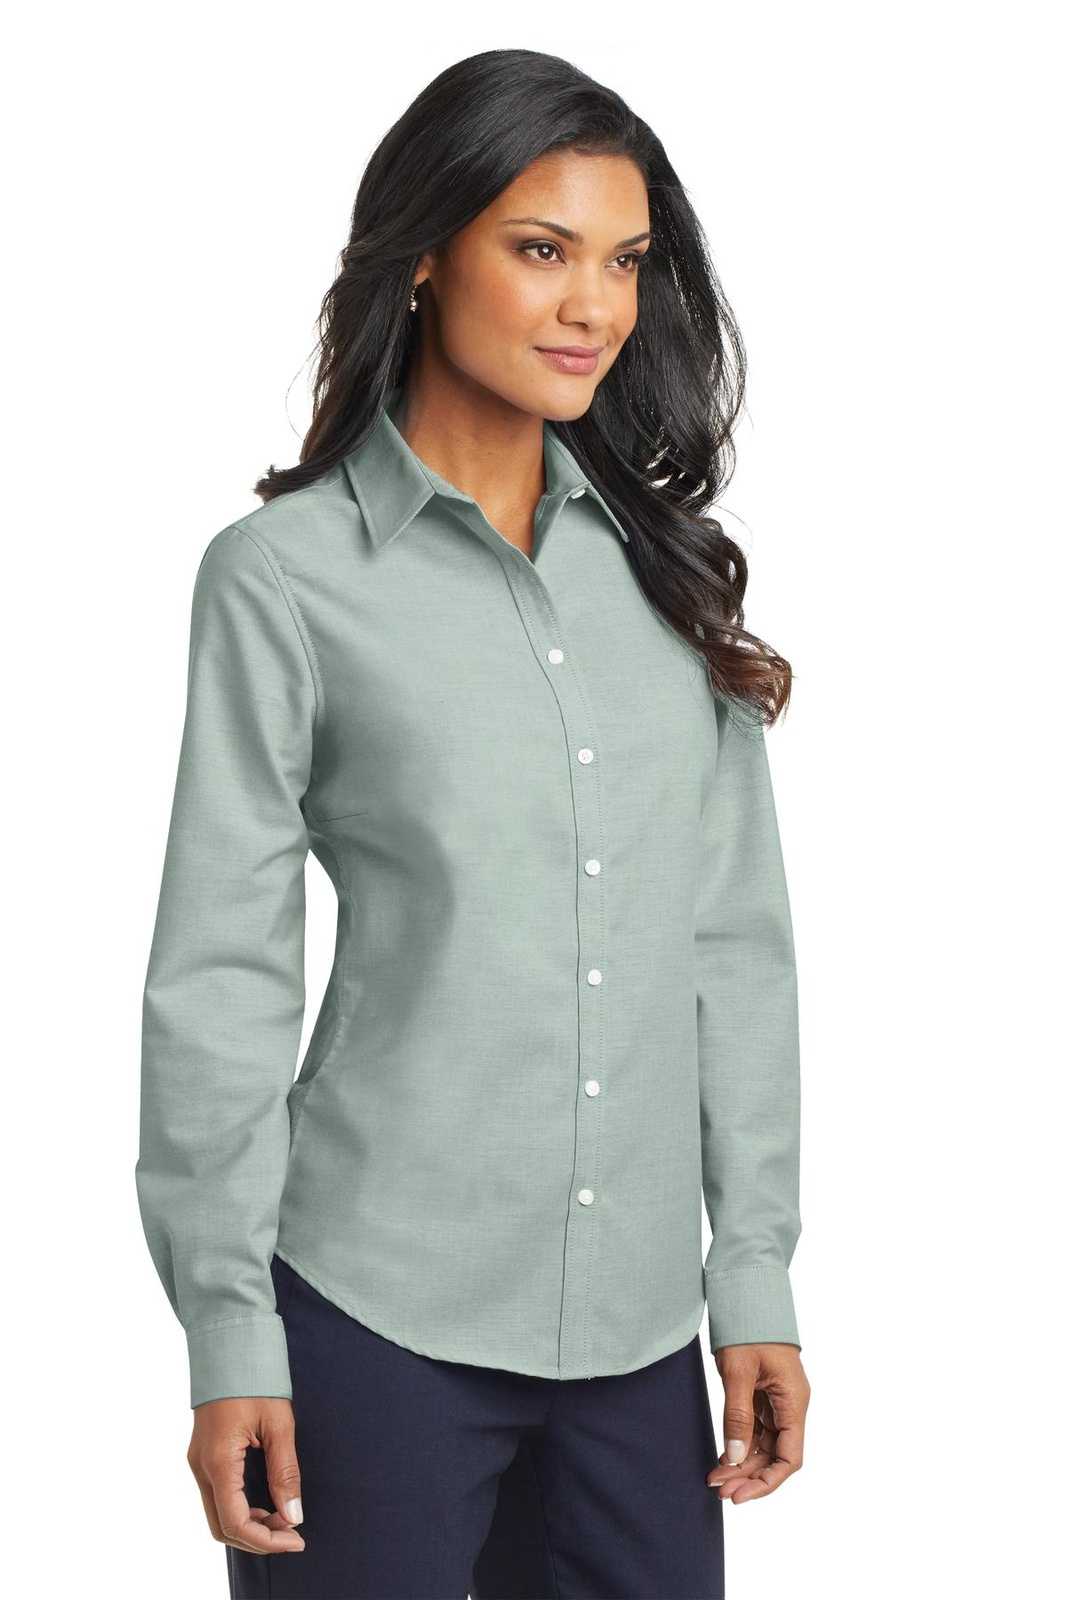 Port Authority L658 Ladies Superpro Oxford Shirt - Green - HIT a Double - 4